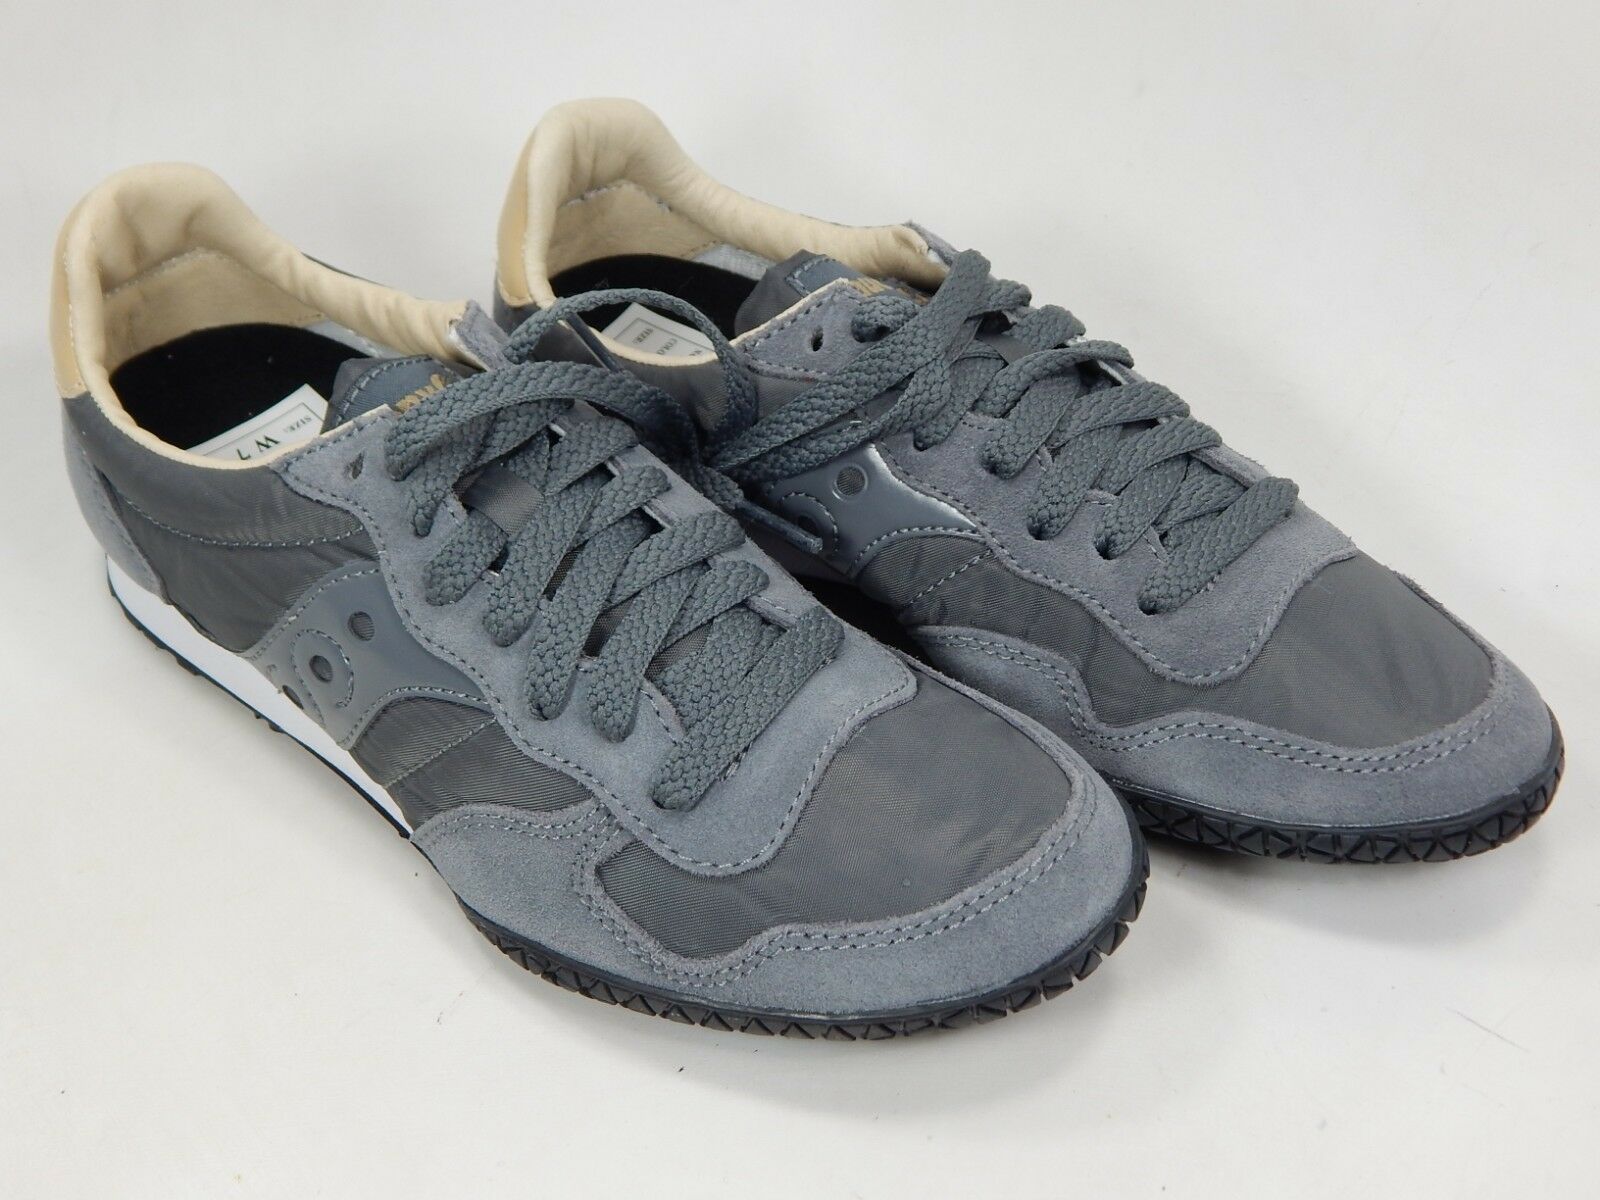 Saucony Bullet Original S1943-171 Women's Running Shoes Size 7 M (B) EU ...